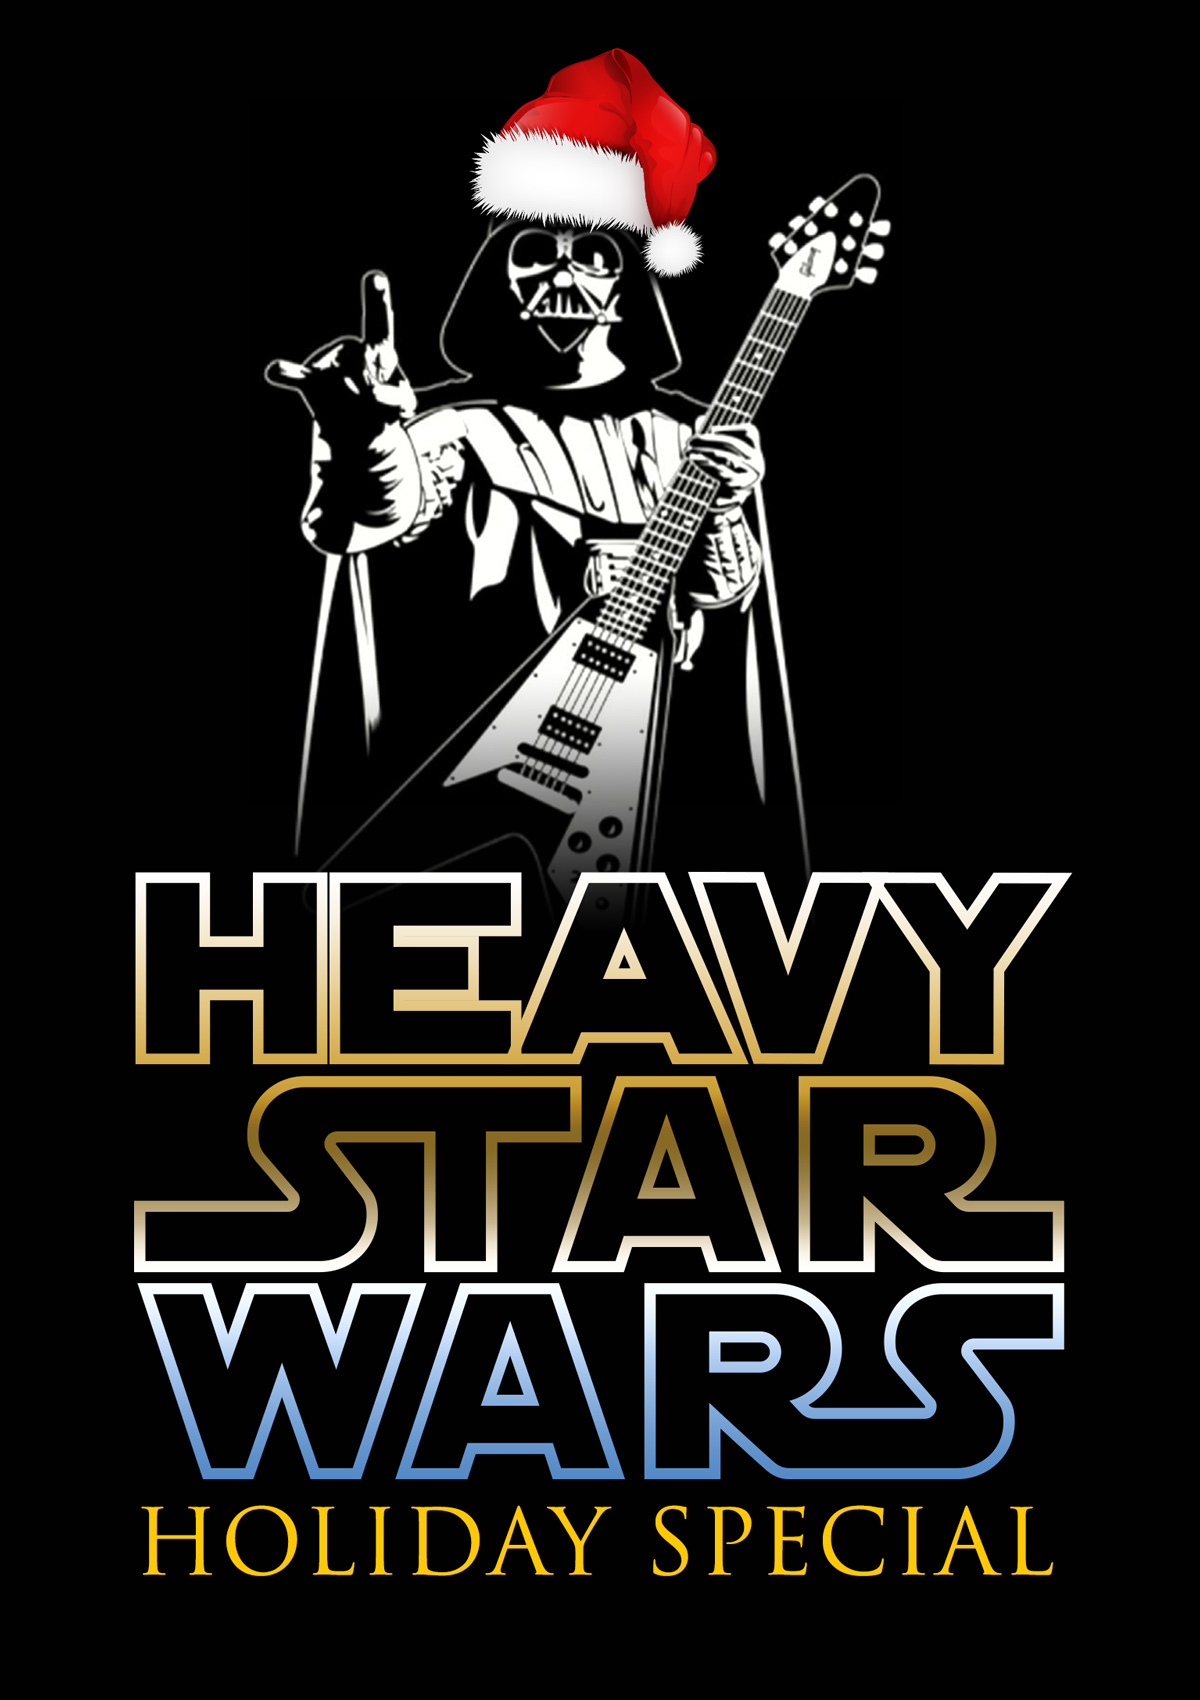 Heavy-Star-Wars-HOLIDAY-SPECIAL.jpg